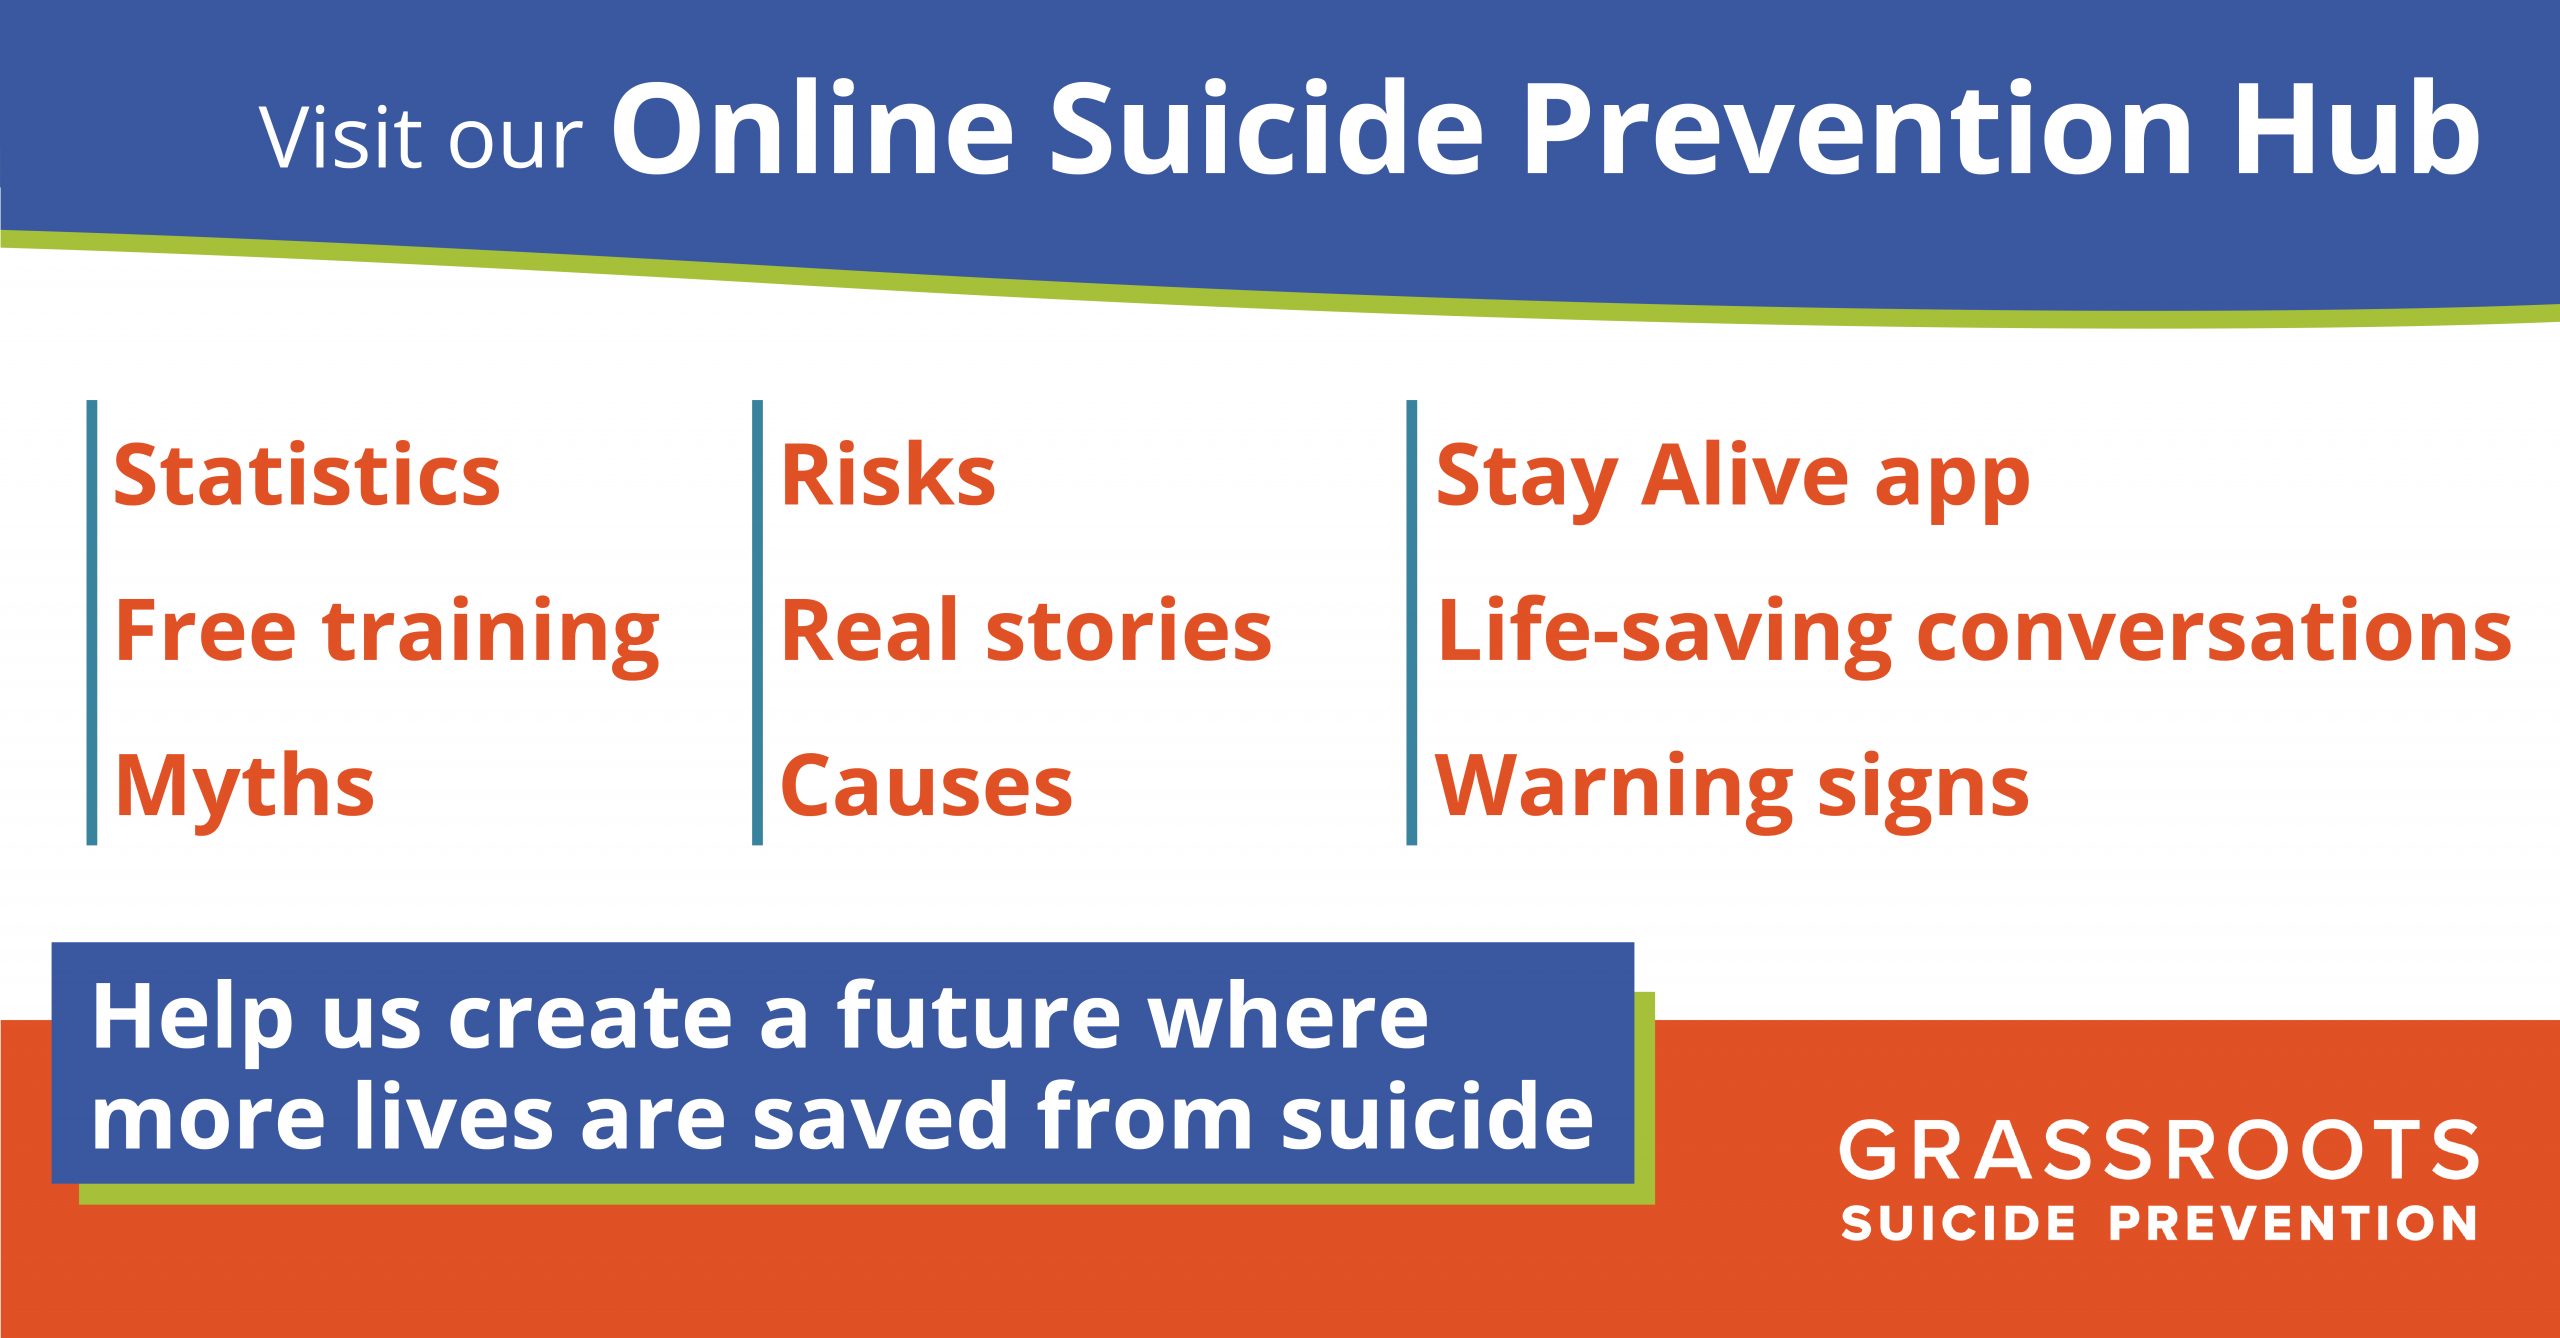 Visit our Online Suicide Prevention Hub